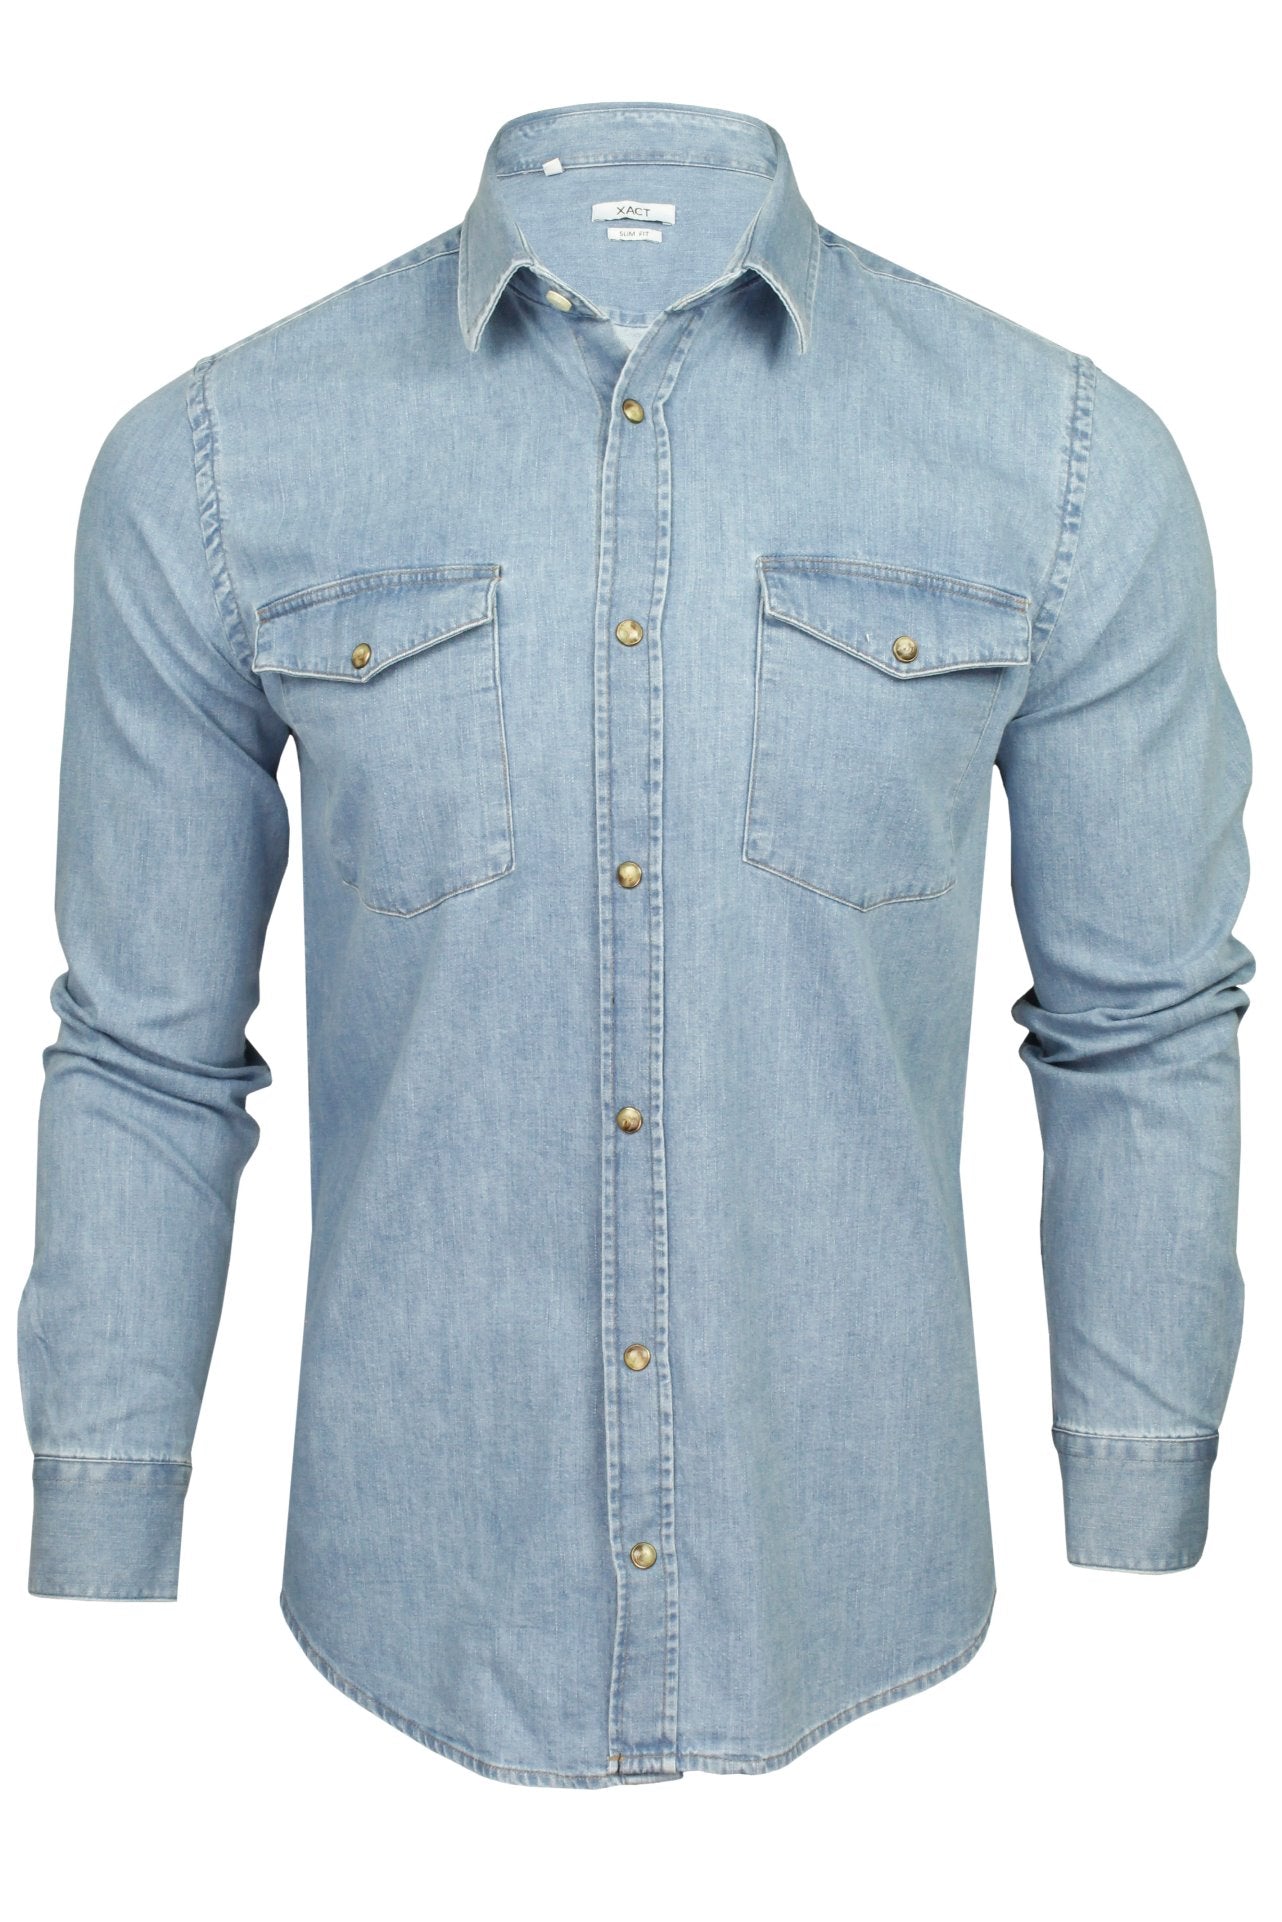 Xact Mens 6.6 oz Denim Shirt - Long Sleeved-Main Image